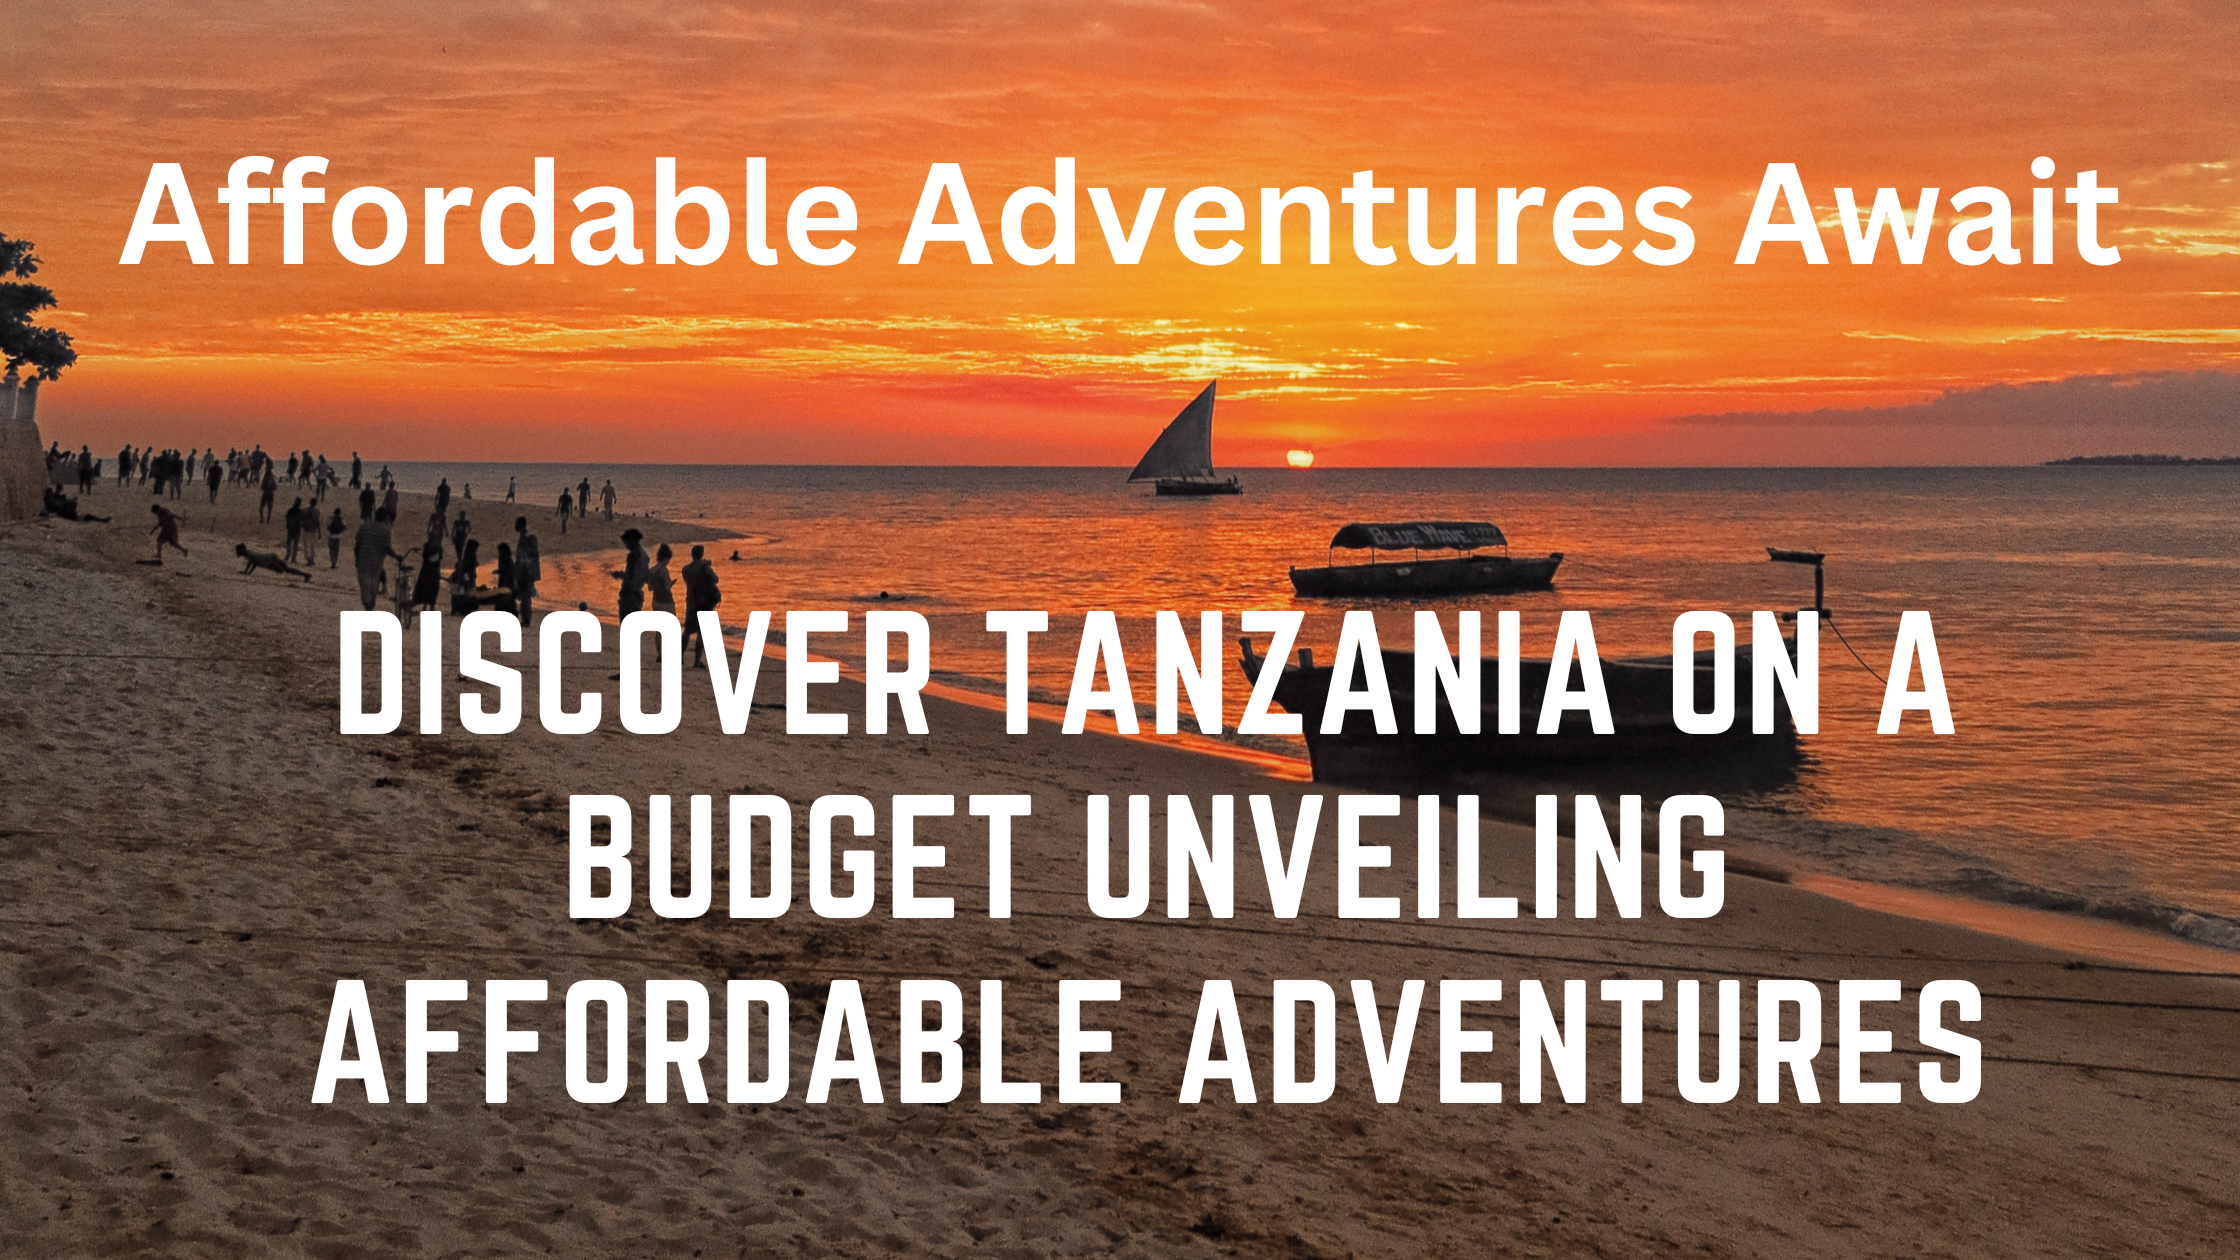 Budget-Friendly Activities in Tanzania- Discover lesser-known, budget-friendly activities and attractions in Tanzania.